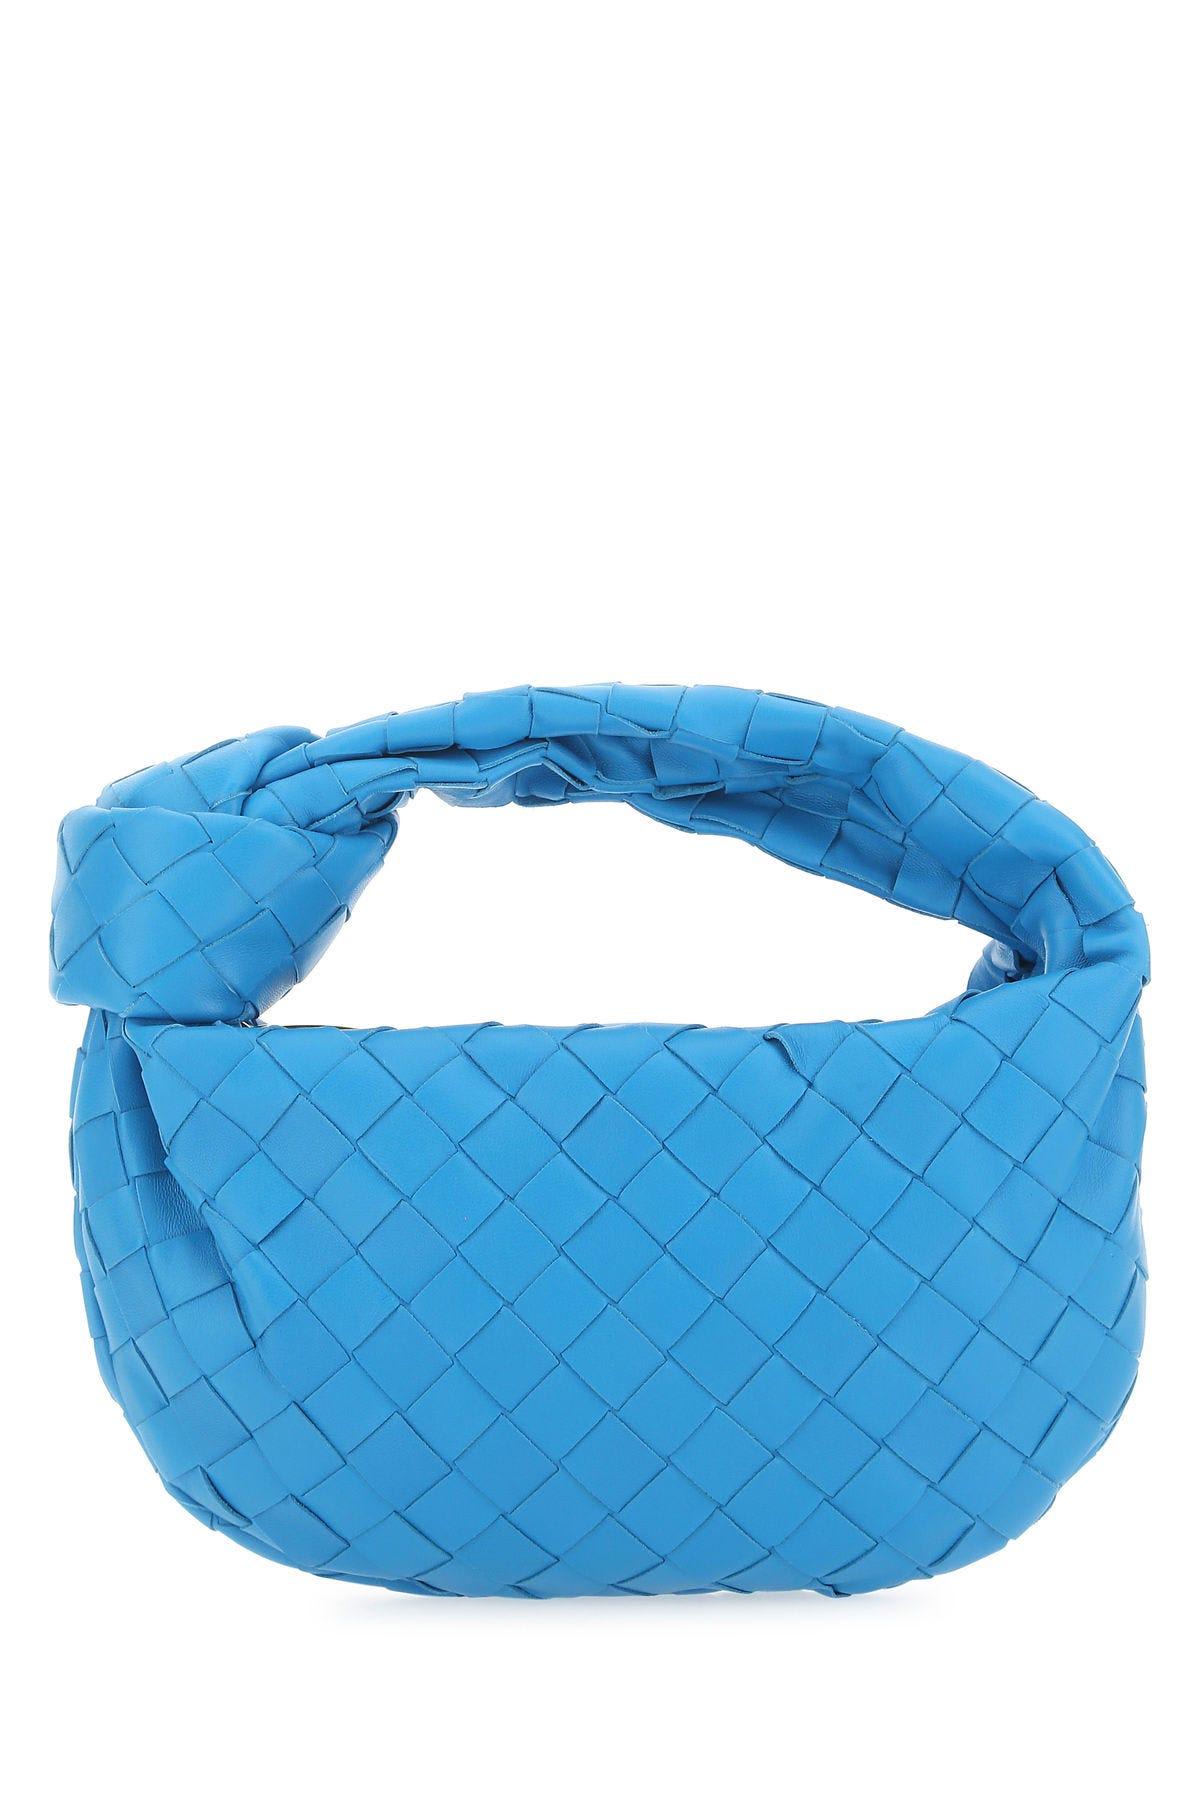 Bottega Veneta Turquoise Nappa Leather Mini Jodie Handbag